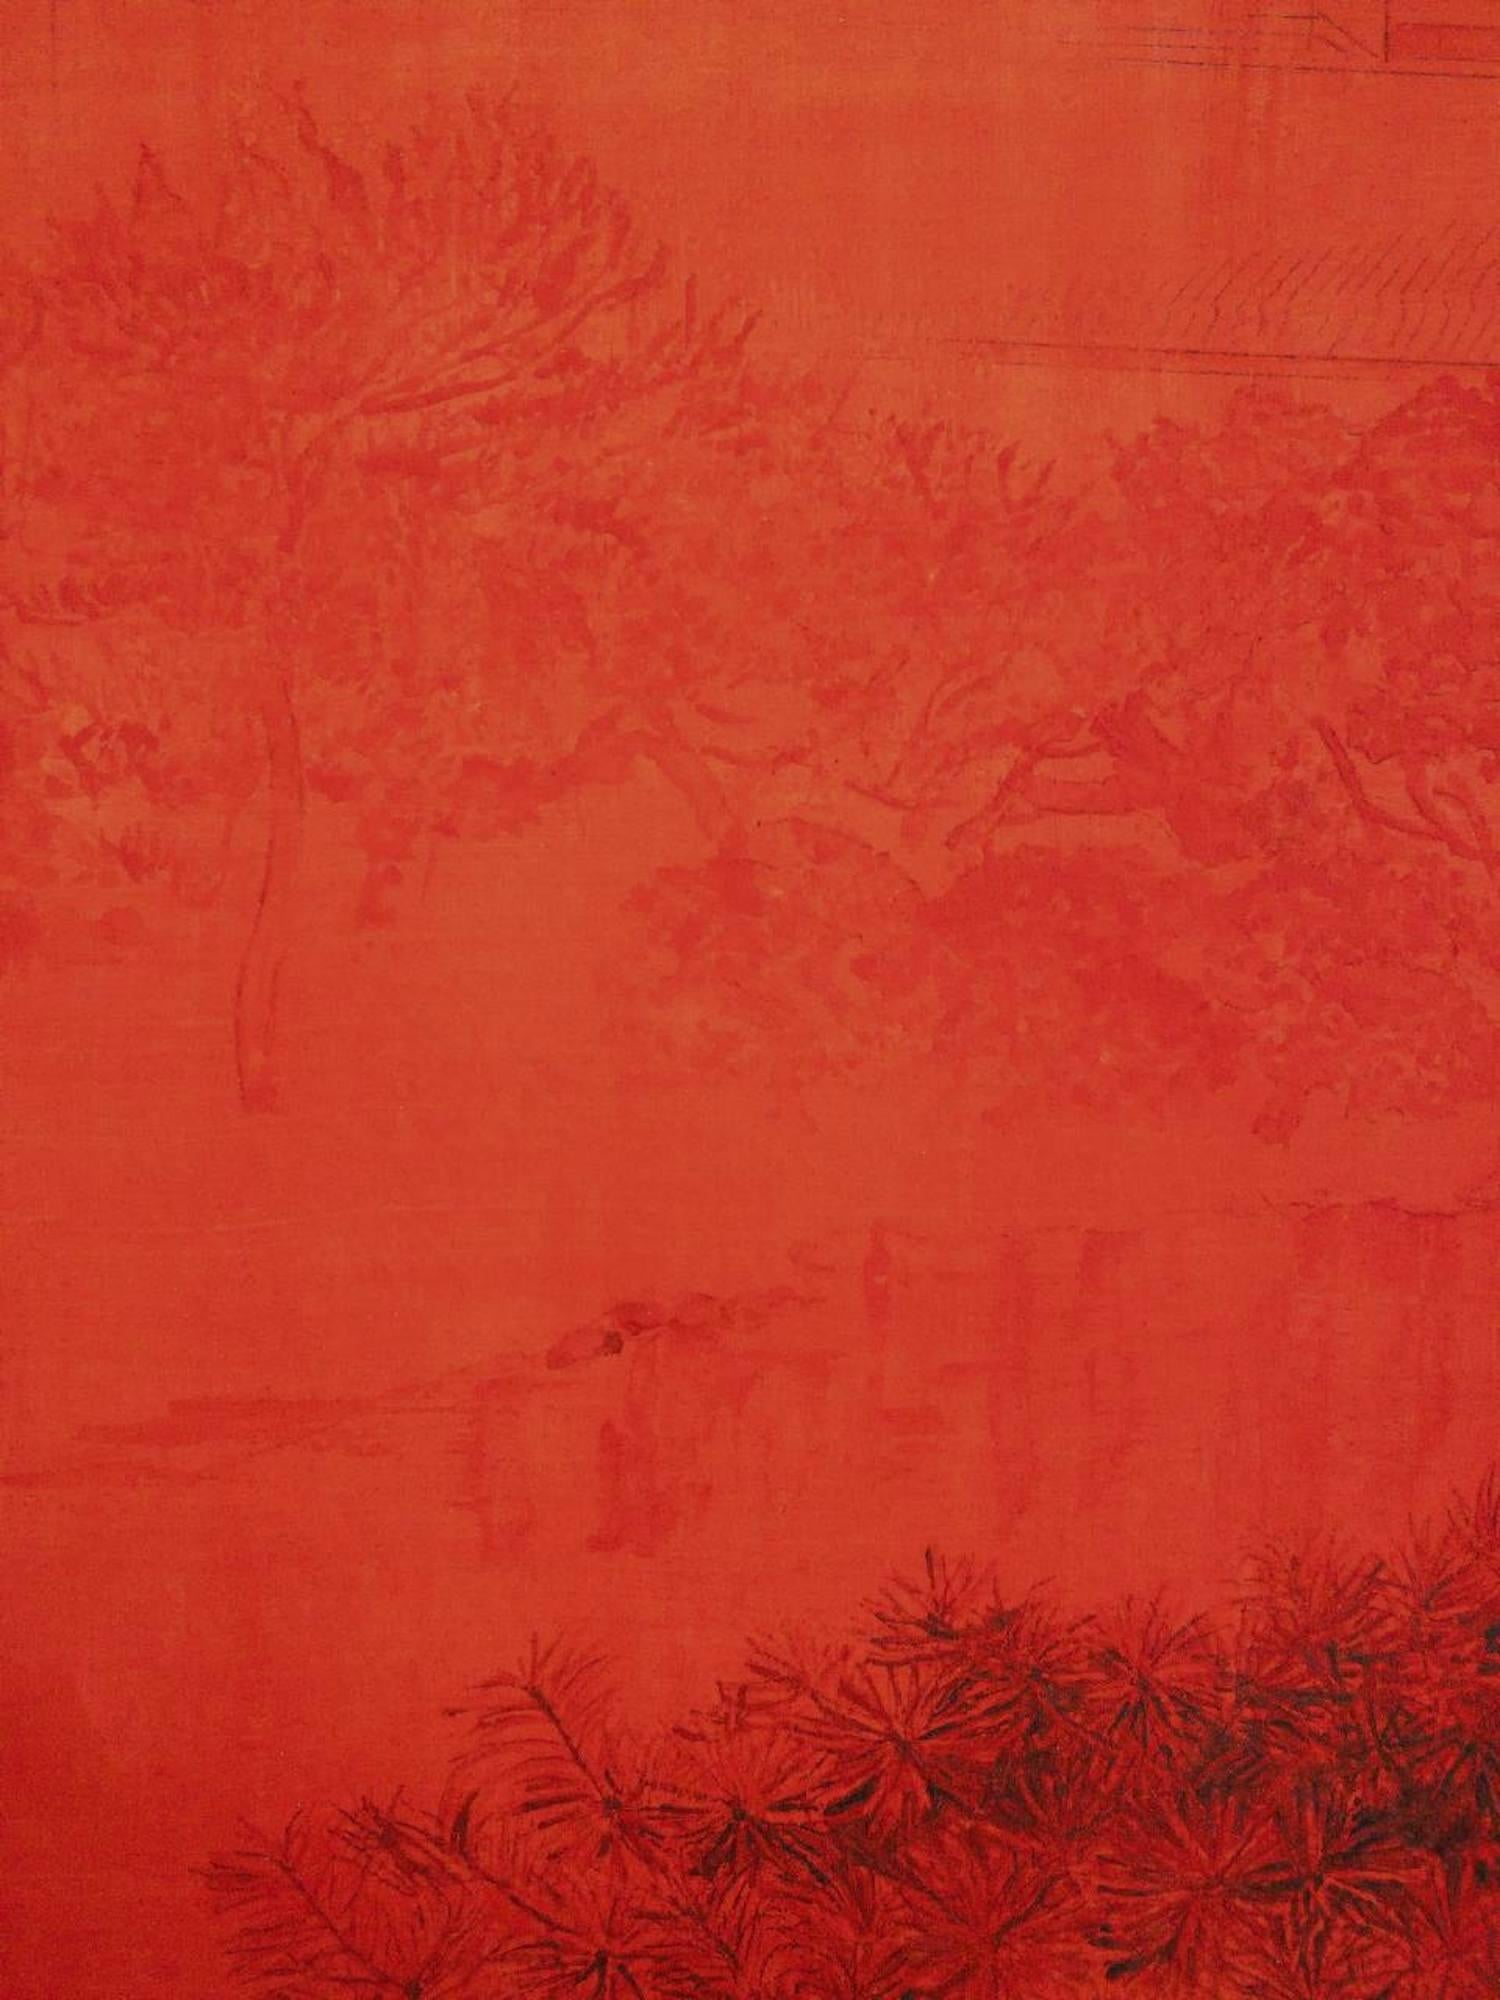 Urban landscape II, Tokyo by Lumi Mizutani - Japanese garden painting, red For Sale 6